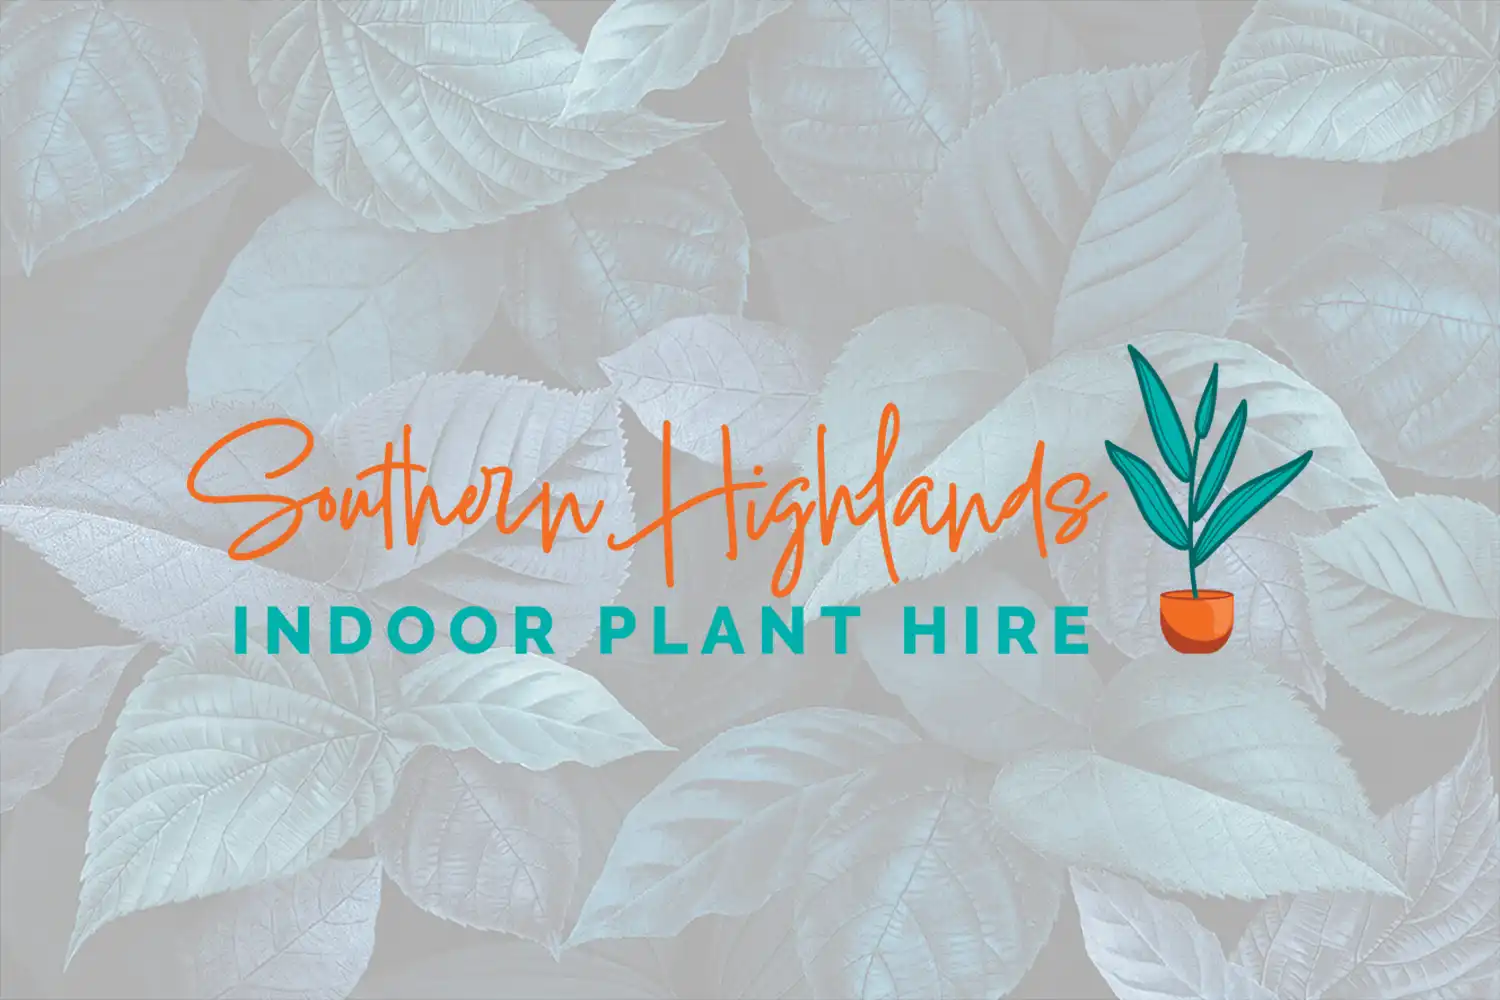 WordPress website, Southern Highlands Indoor Plant Hire